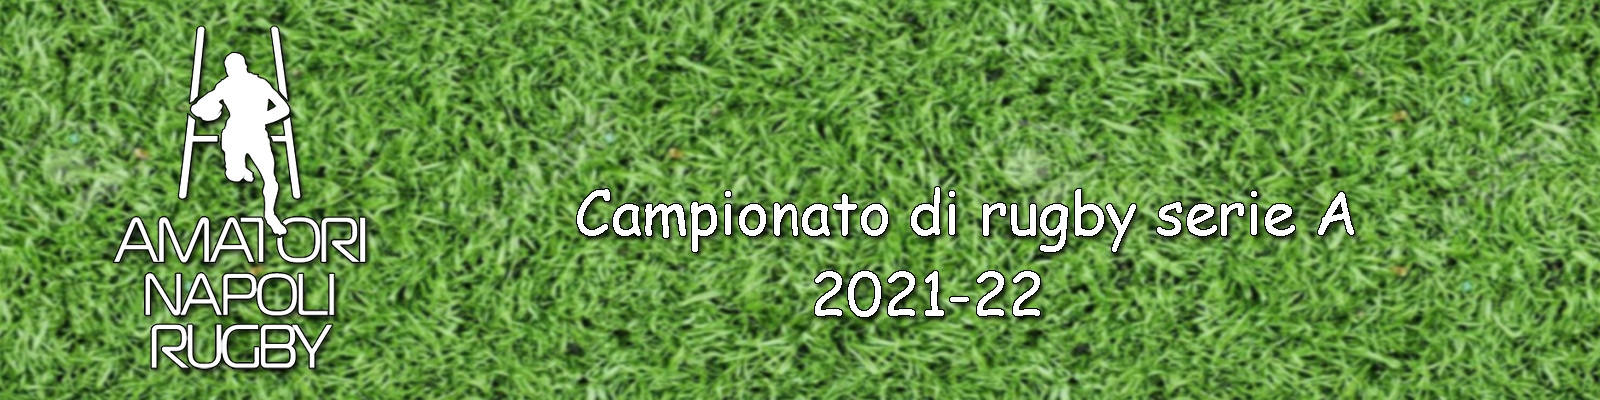 Amatori Napoli Rugby 2021-22